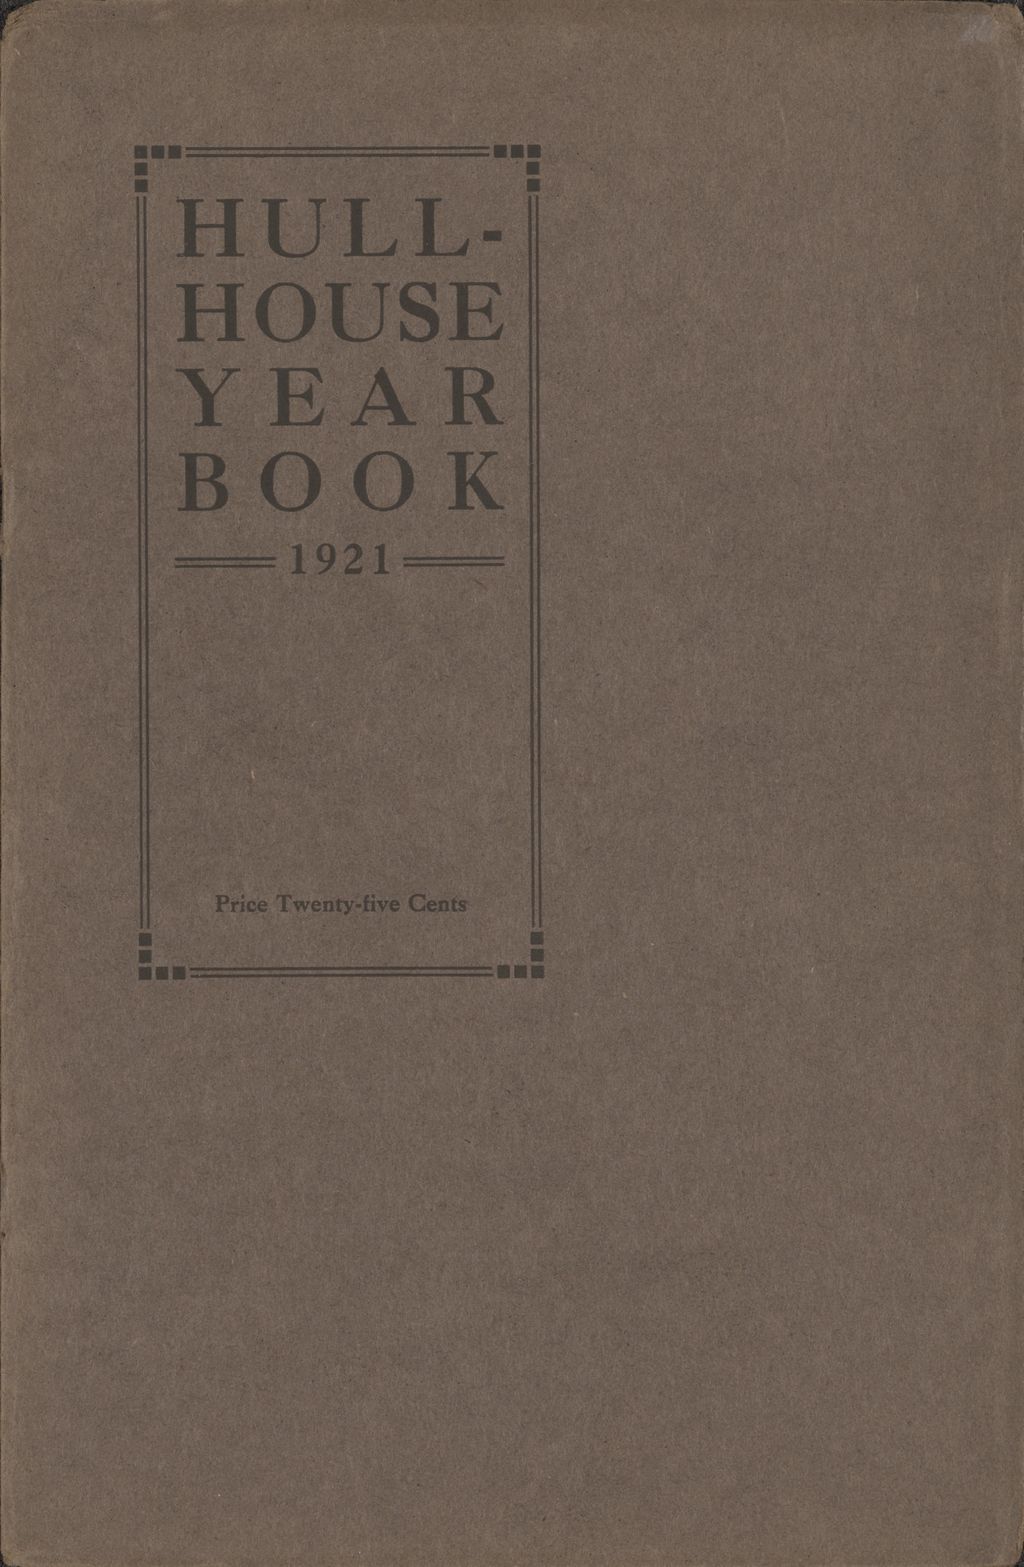 Hull-House Year Book, 1921